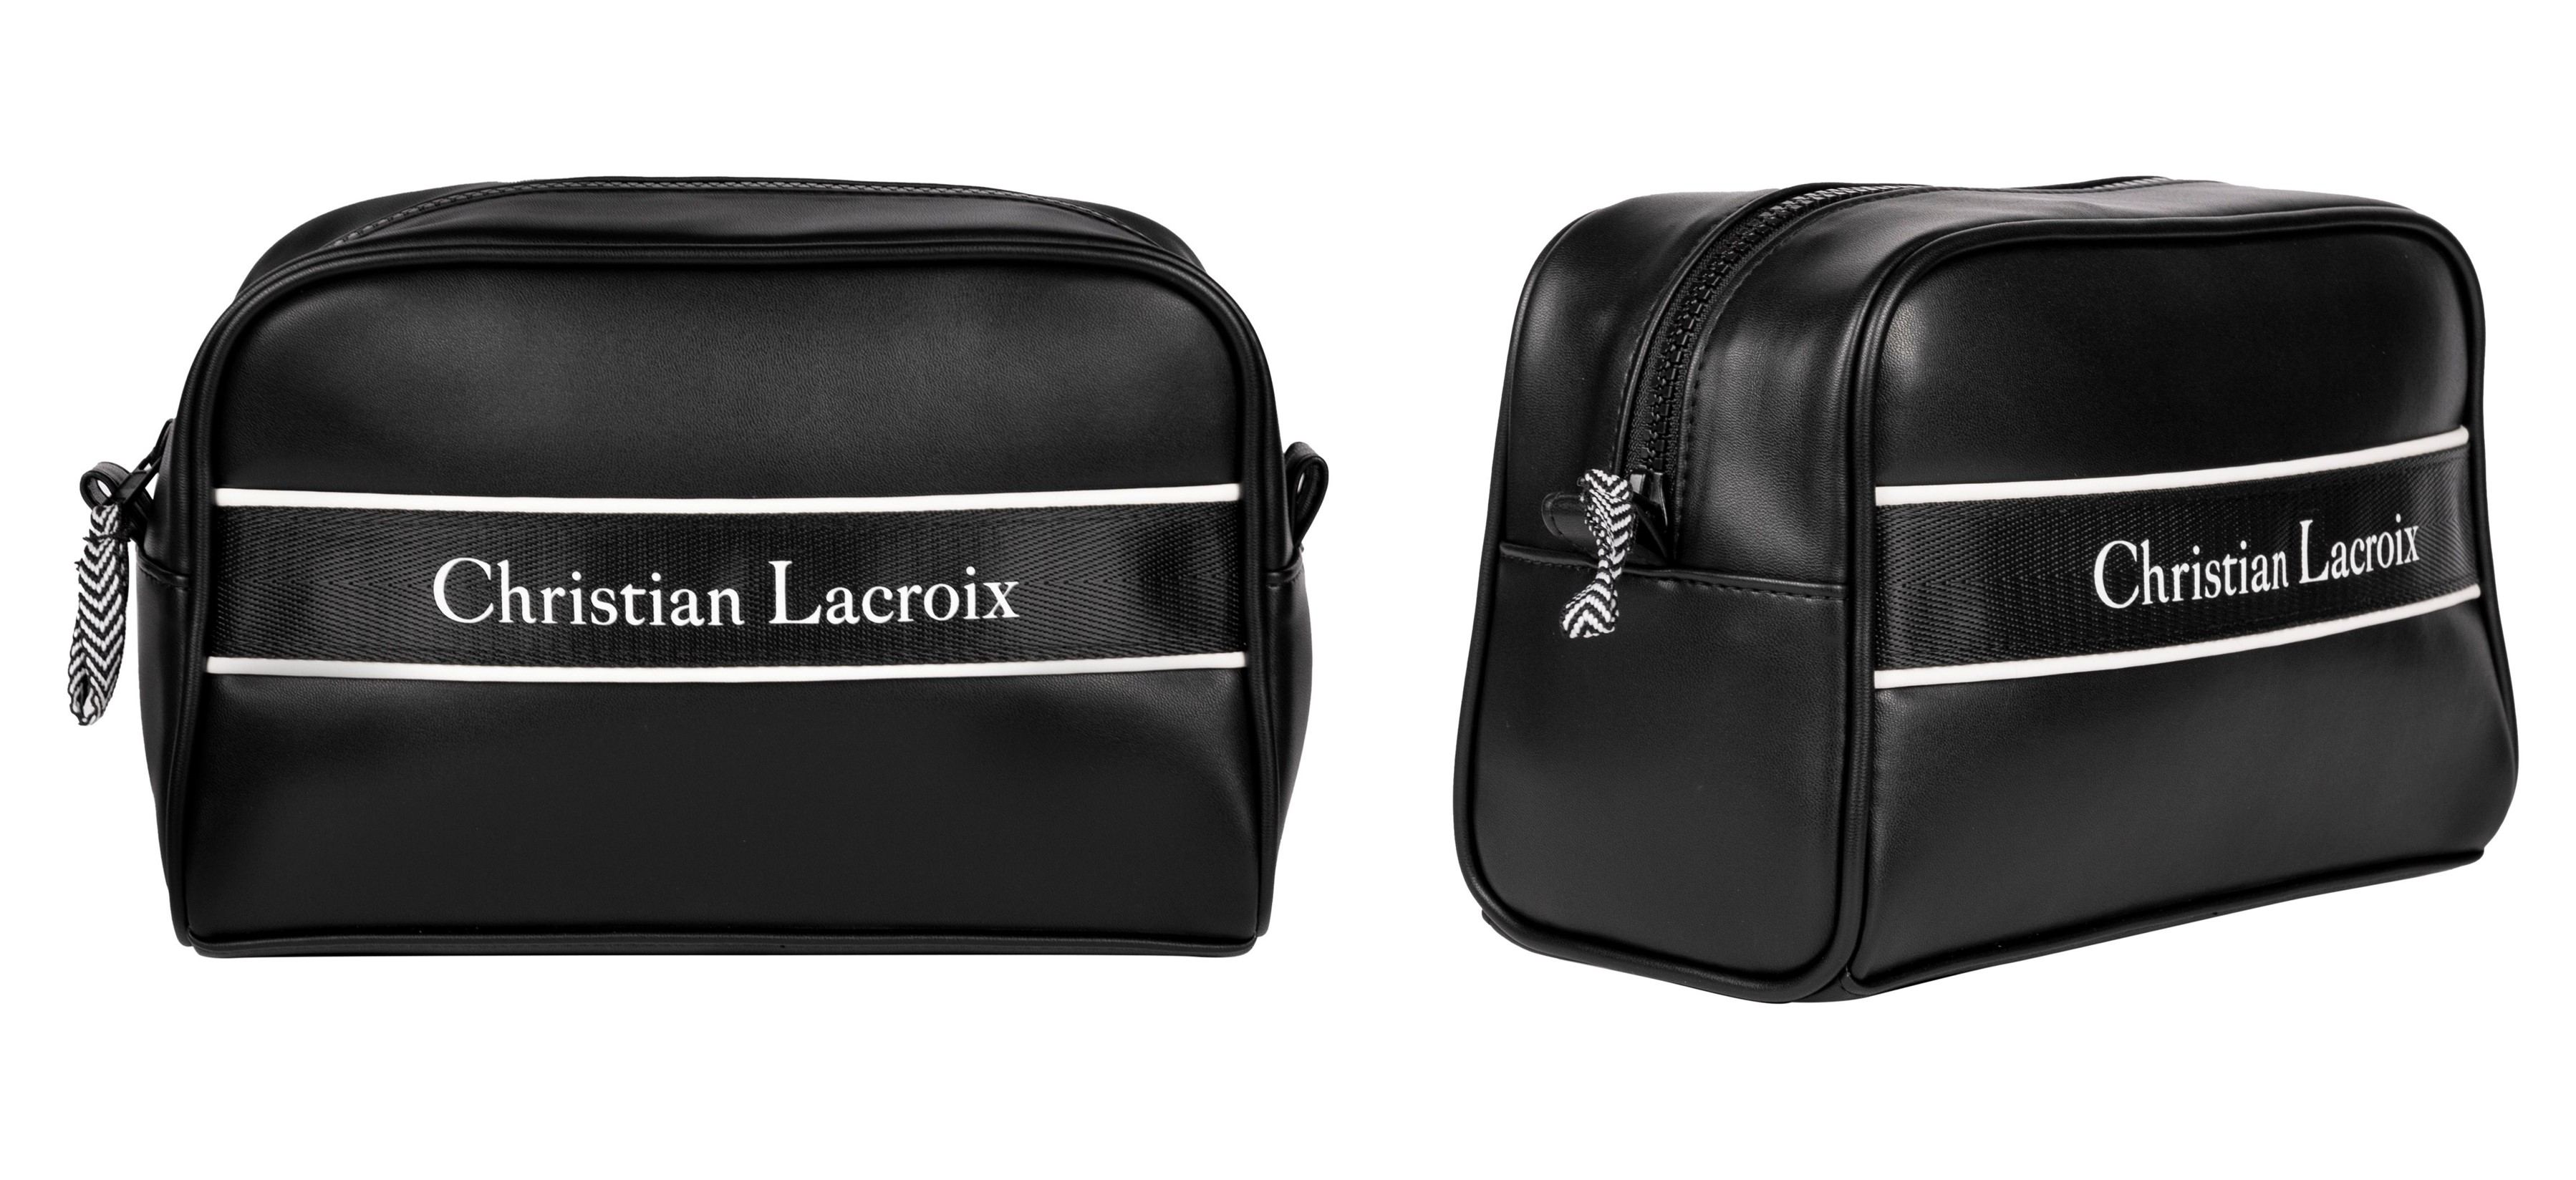 Christian Lacroix Toiletry Bag